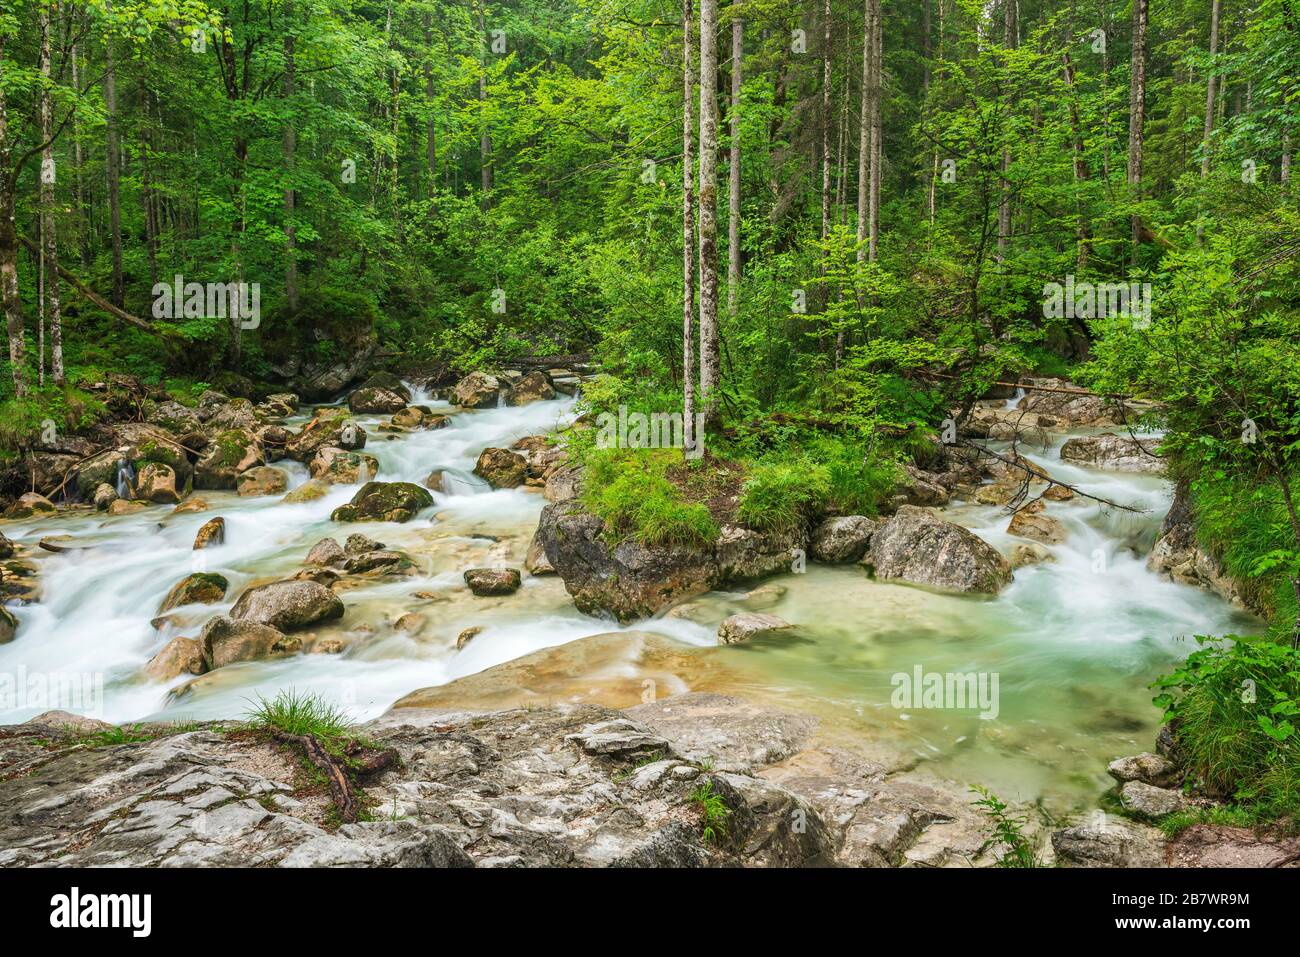 Mountain stream Ramsauer Ache in the enchanted forest, Berchtesgaden National Park, Ramsau, Berchtesgadener Land, Upper Bavaria, Bavaria, Germany Stock Photo